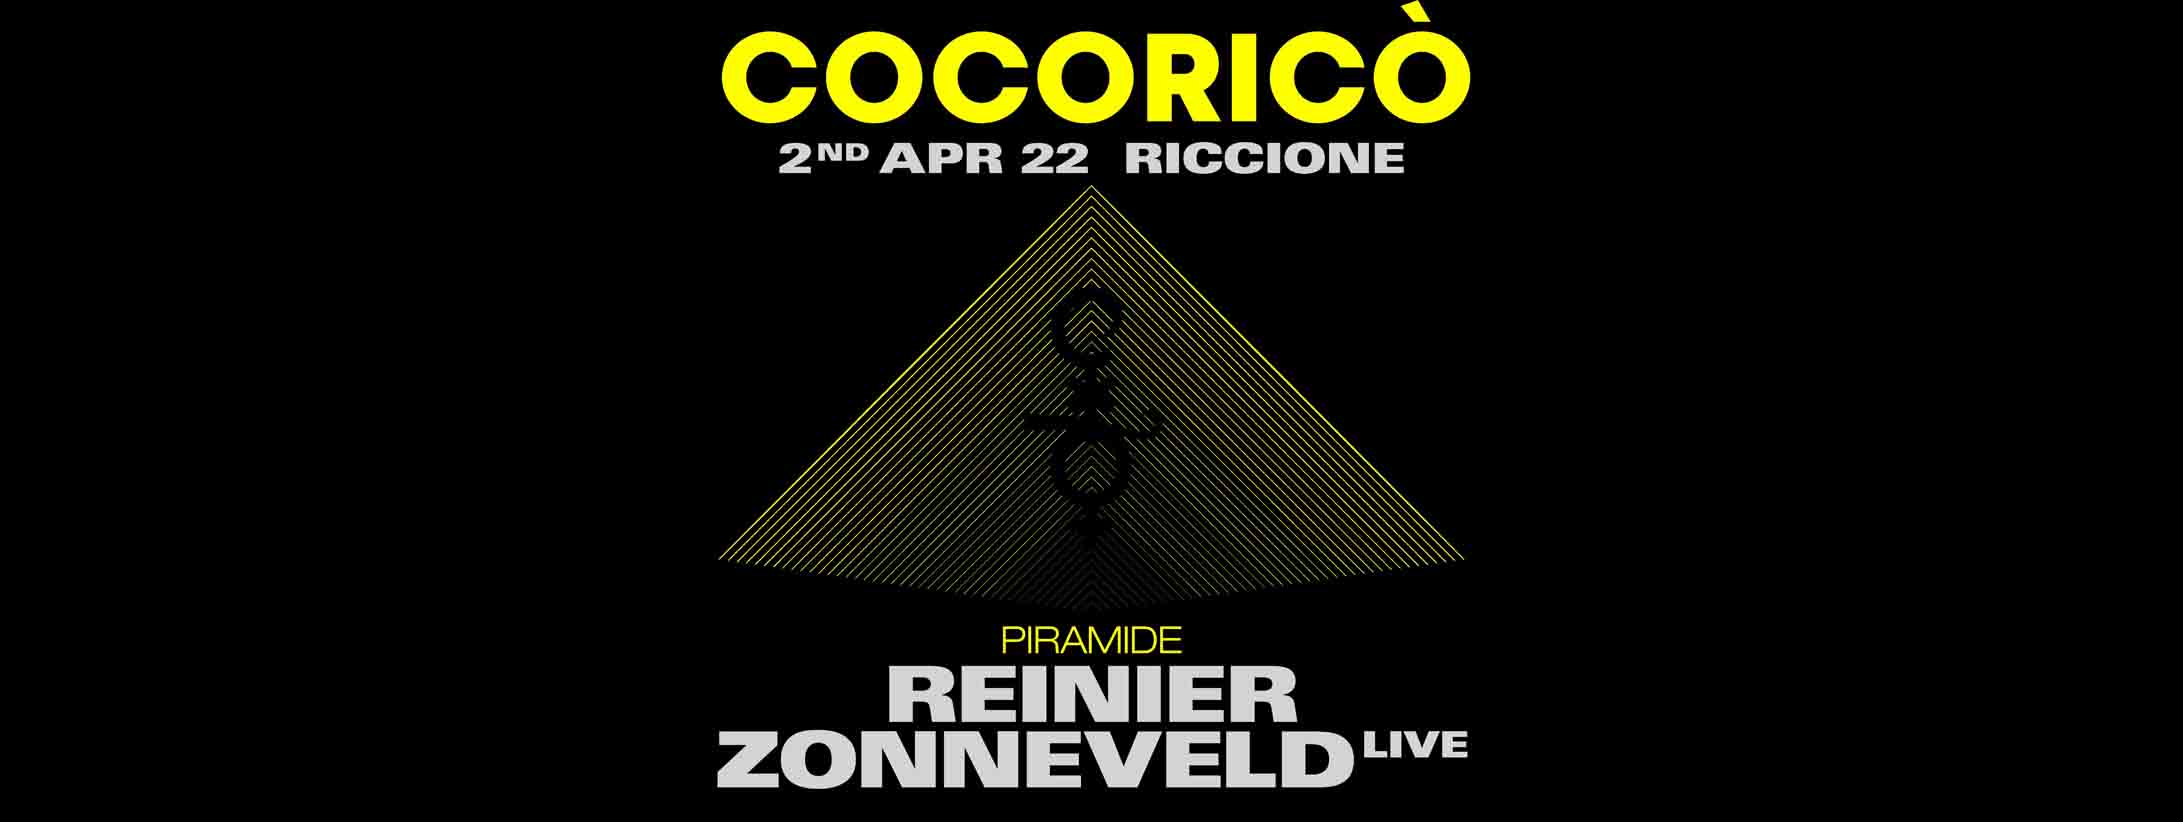 Reinier-zonneveld-cocorico-02-aprile-2022